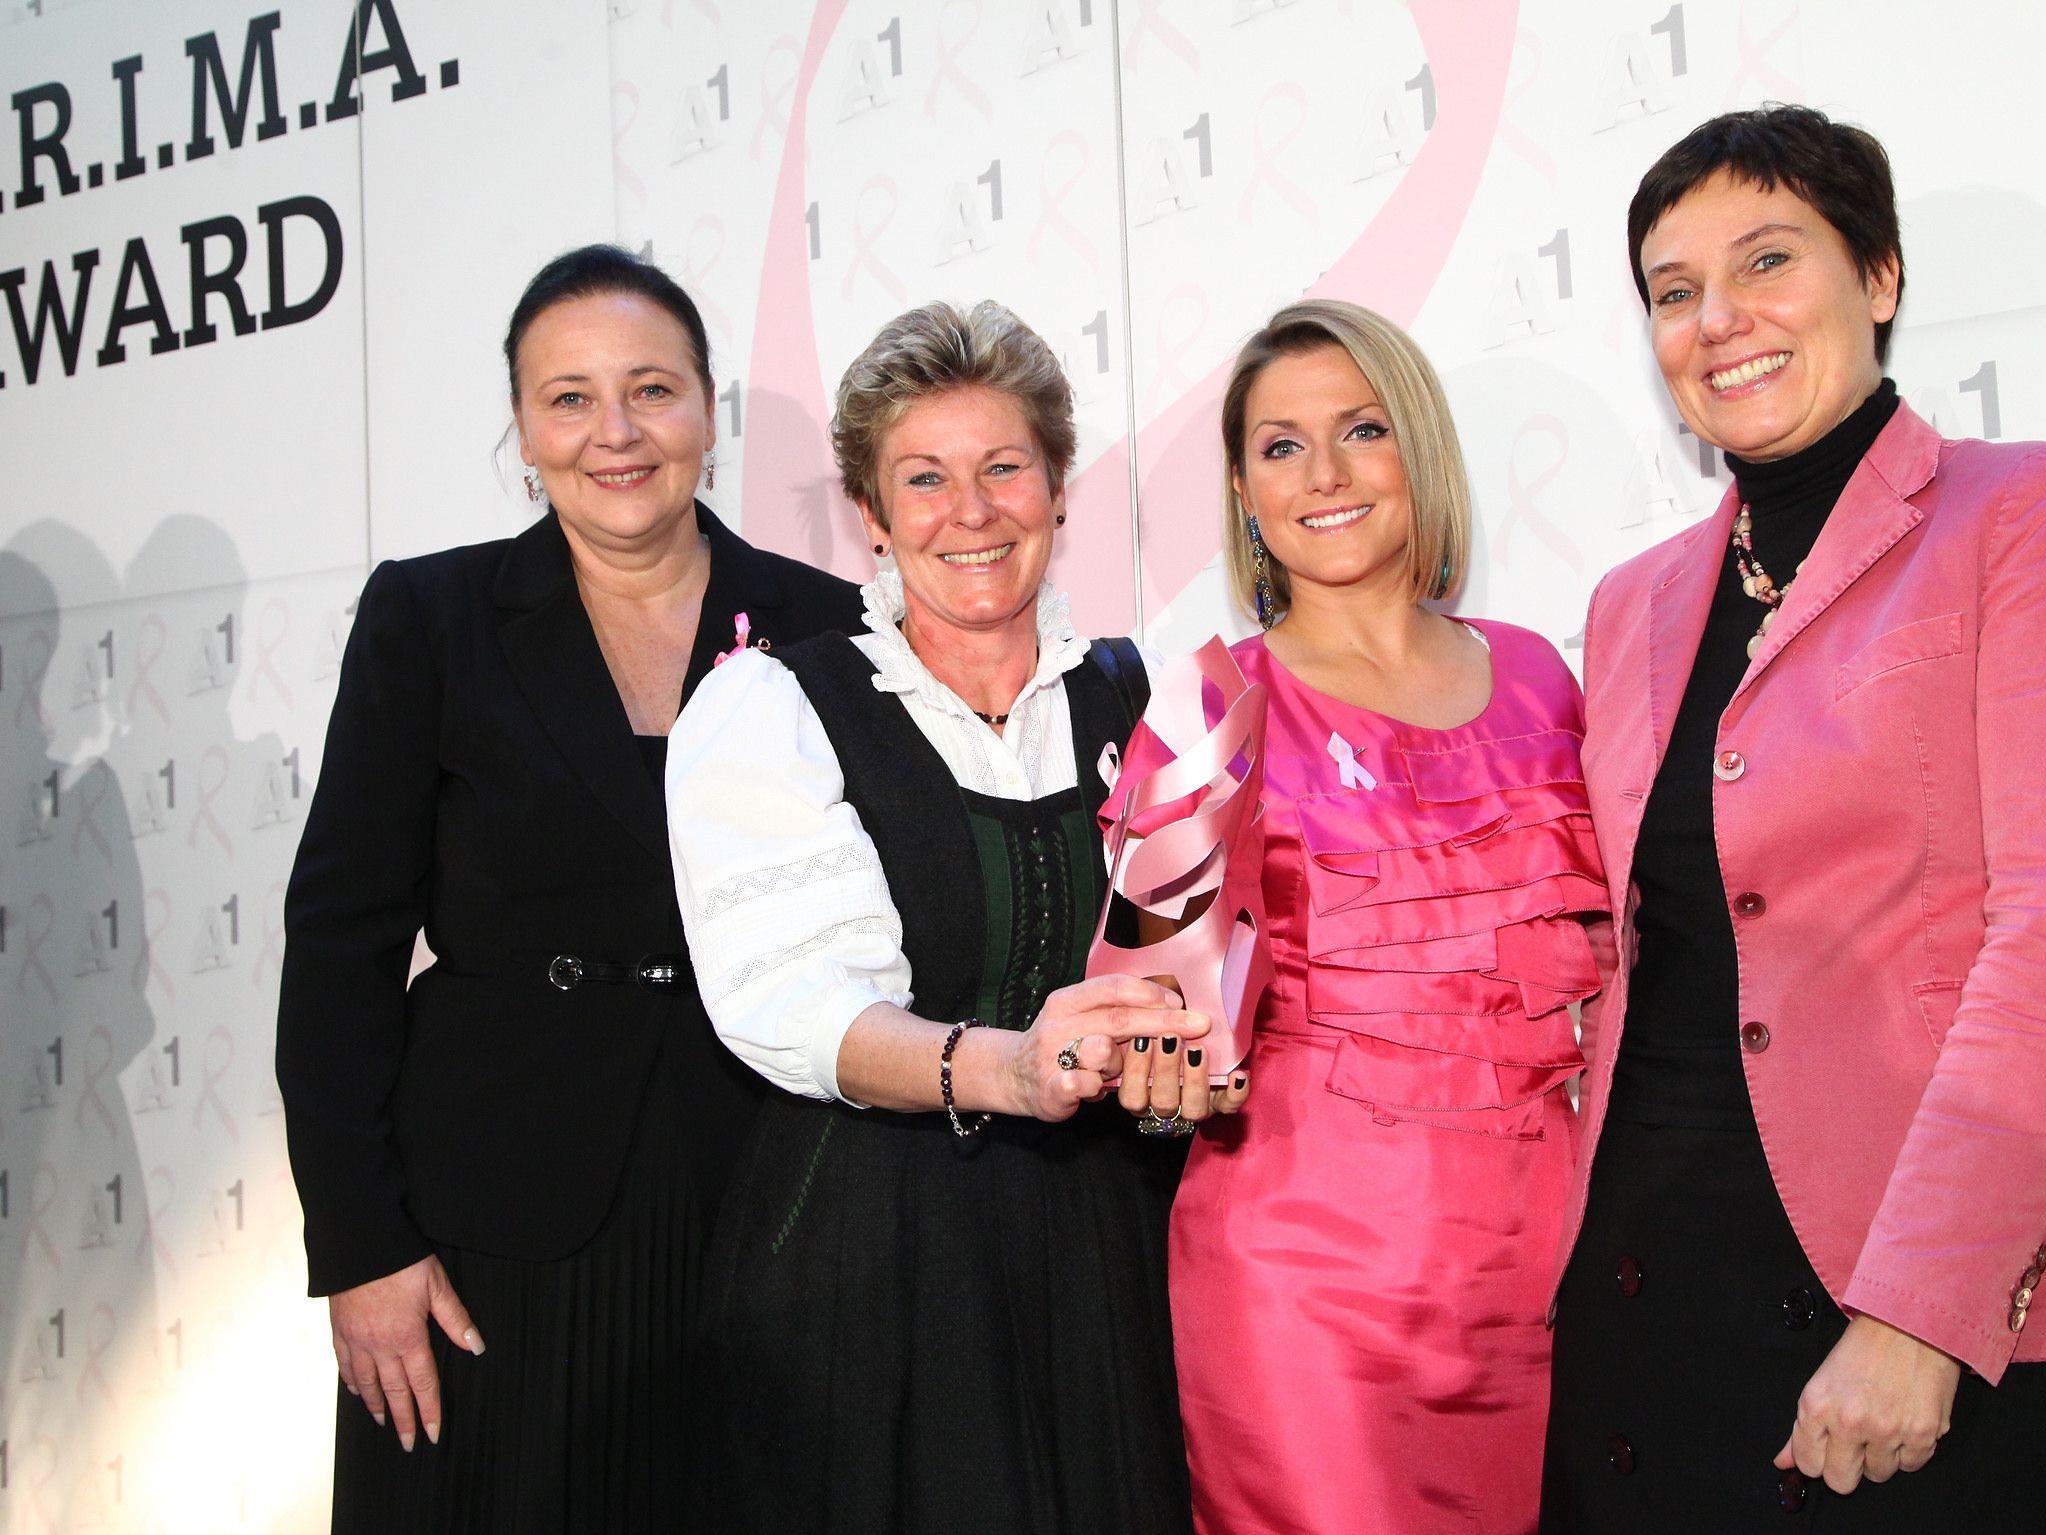 Jeanette Biedermann überreichte den P.R.I.M.A Award an das Team des Unfallkrankenhauses Kalwang.